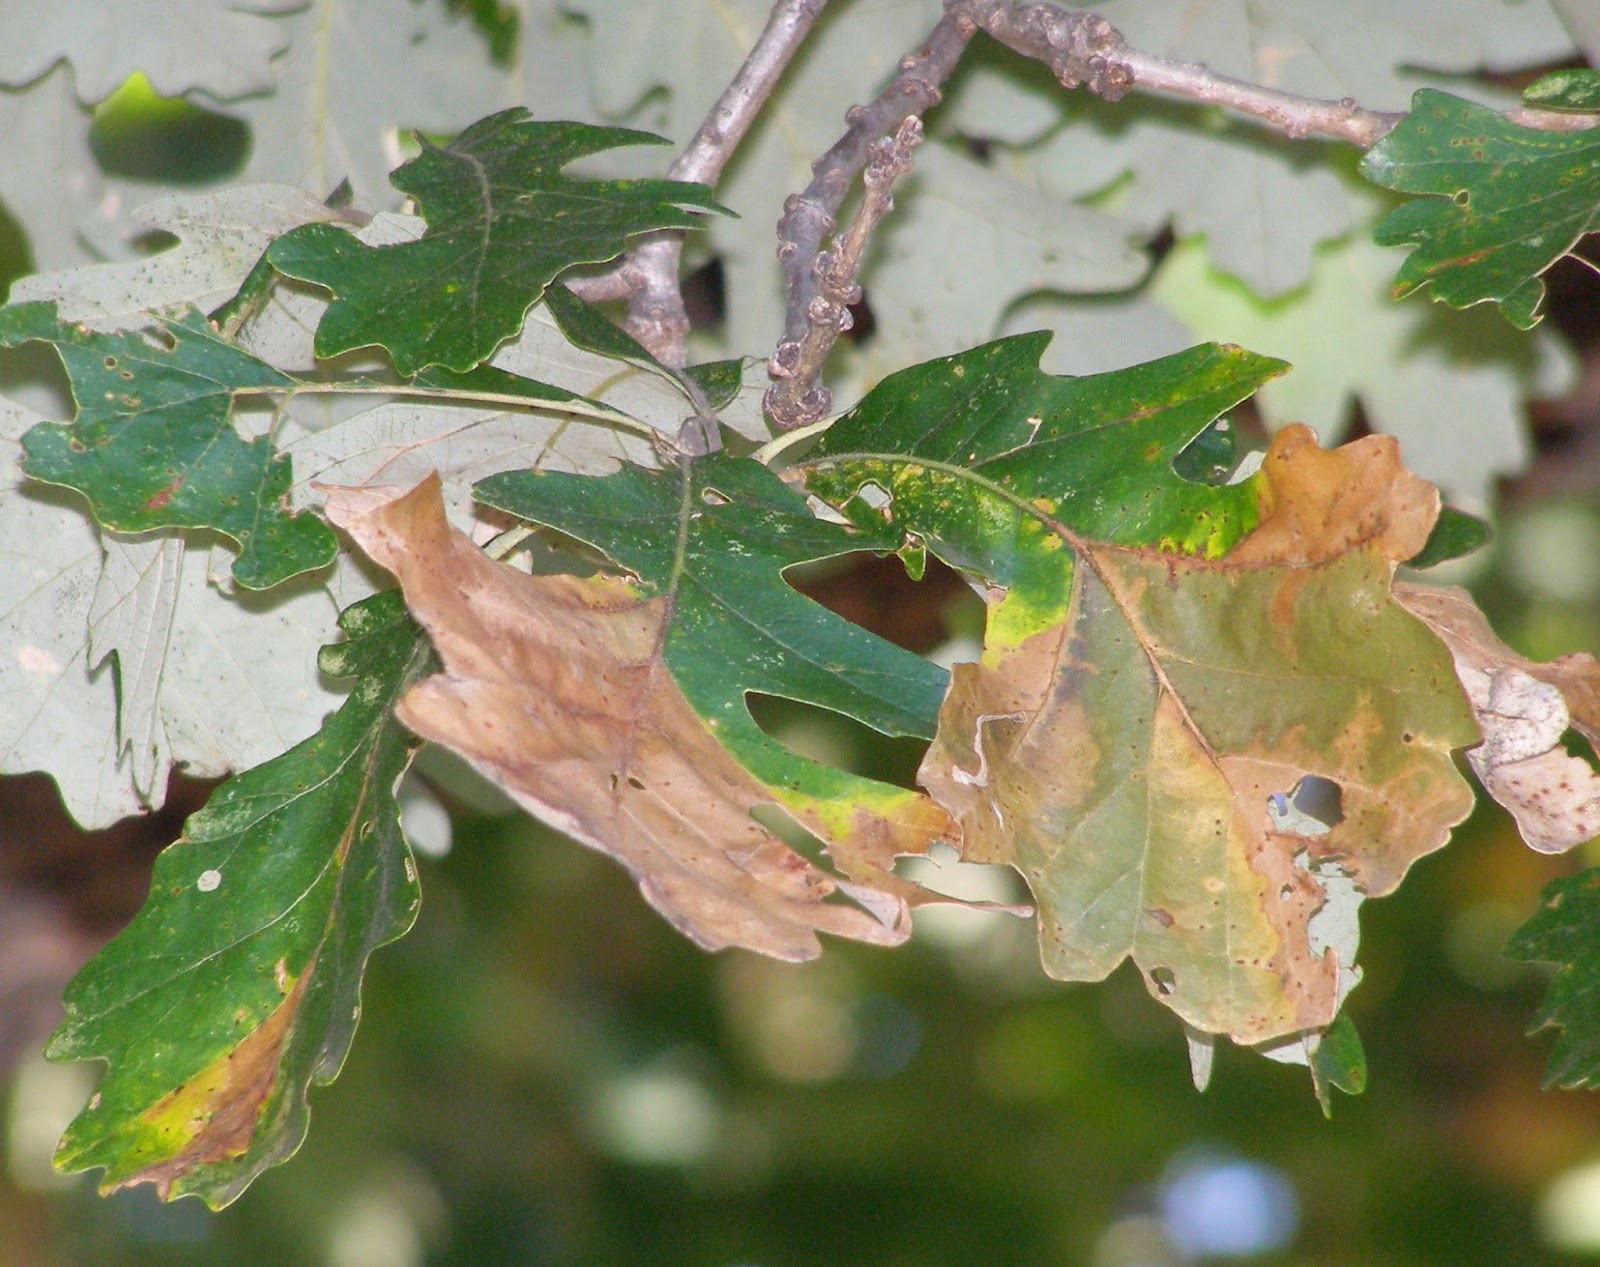 A bad year for bur oak blight : Yard and Garden News : UMN Extension